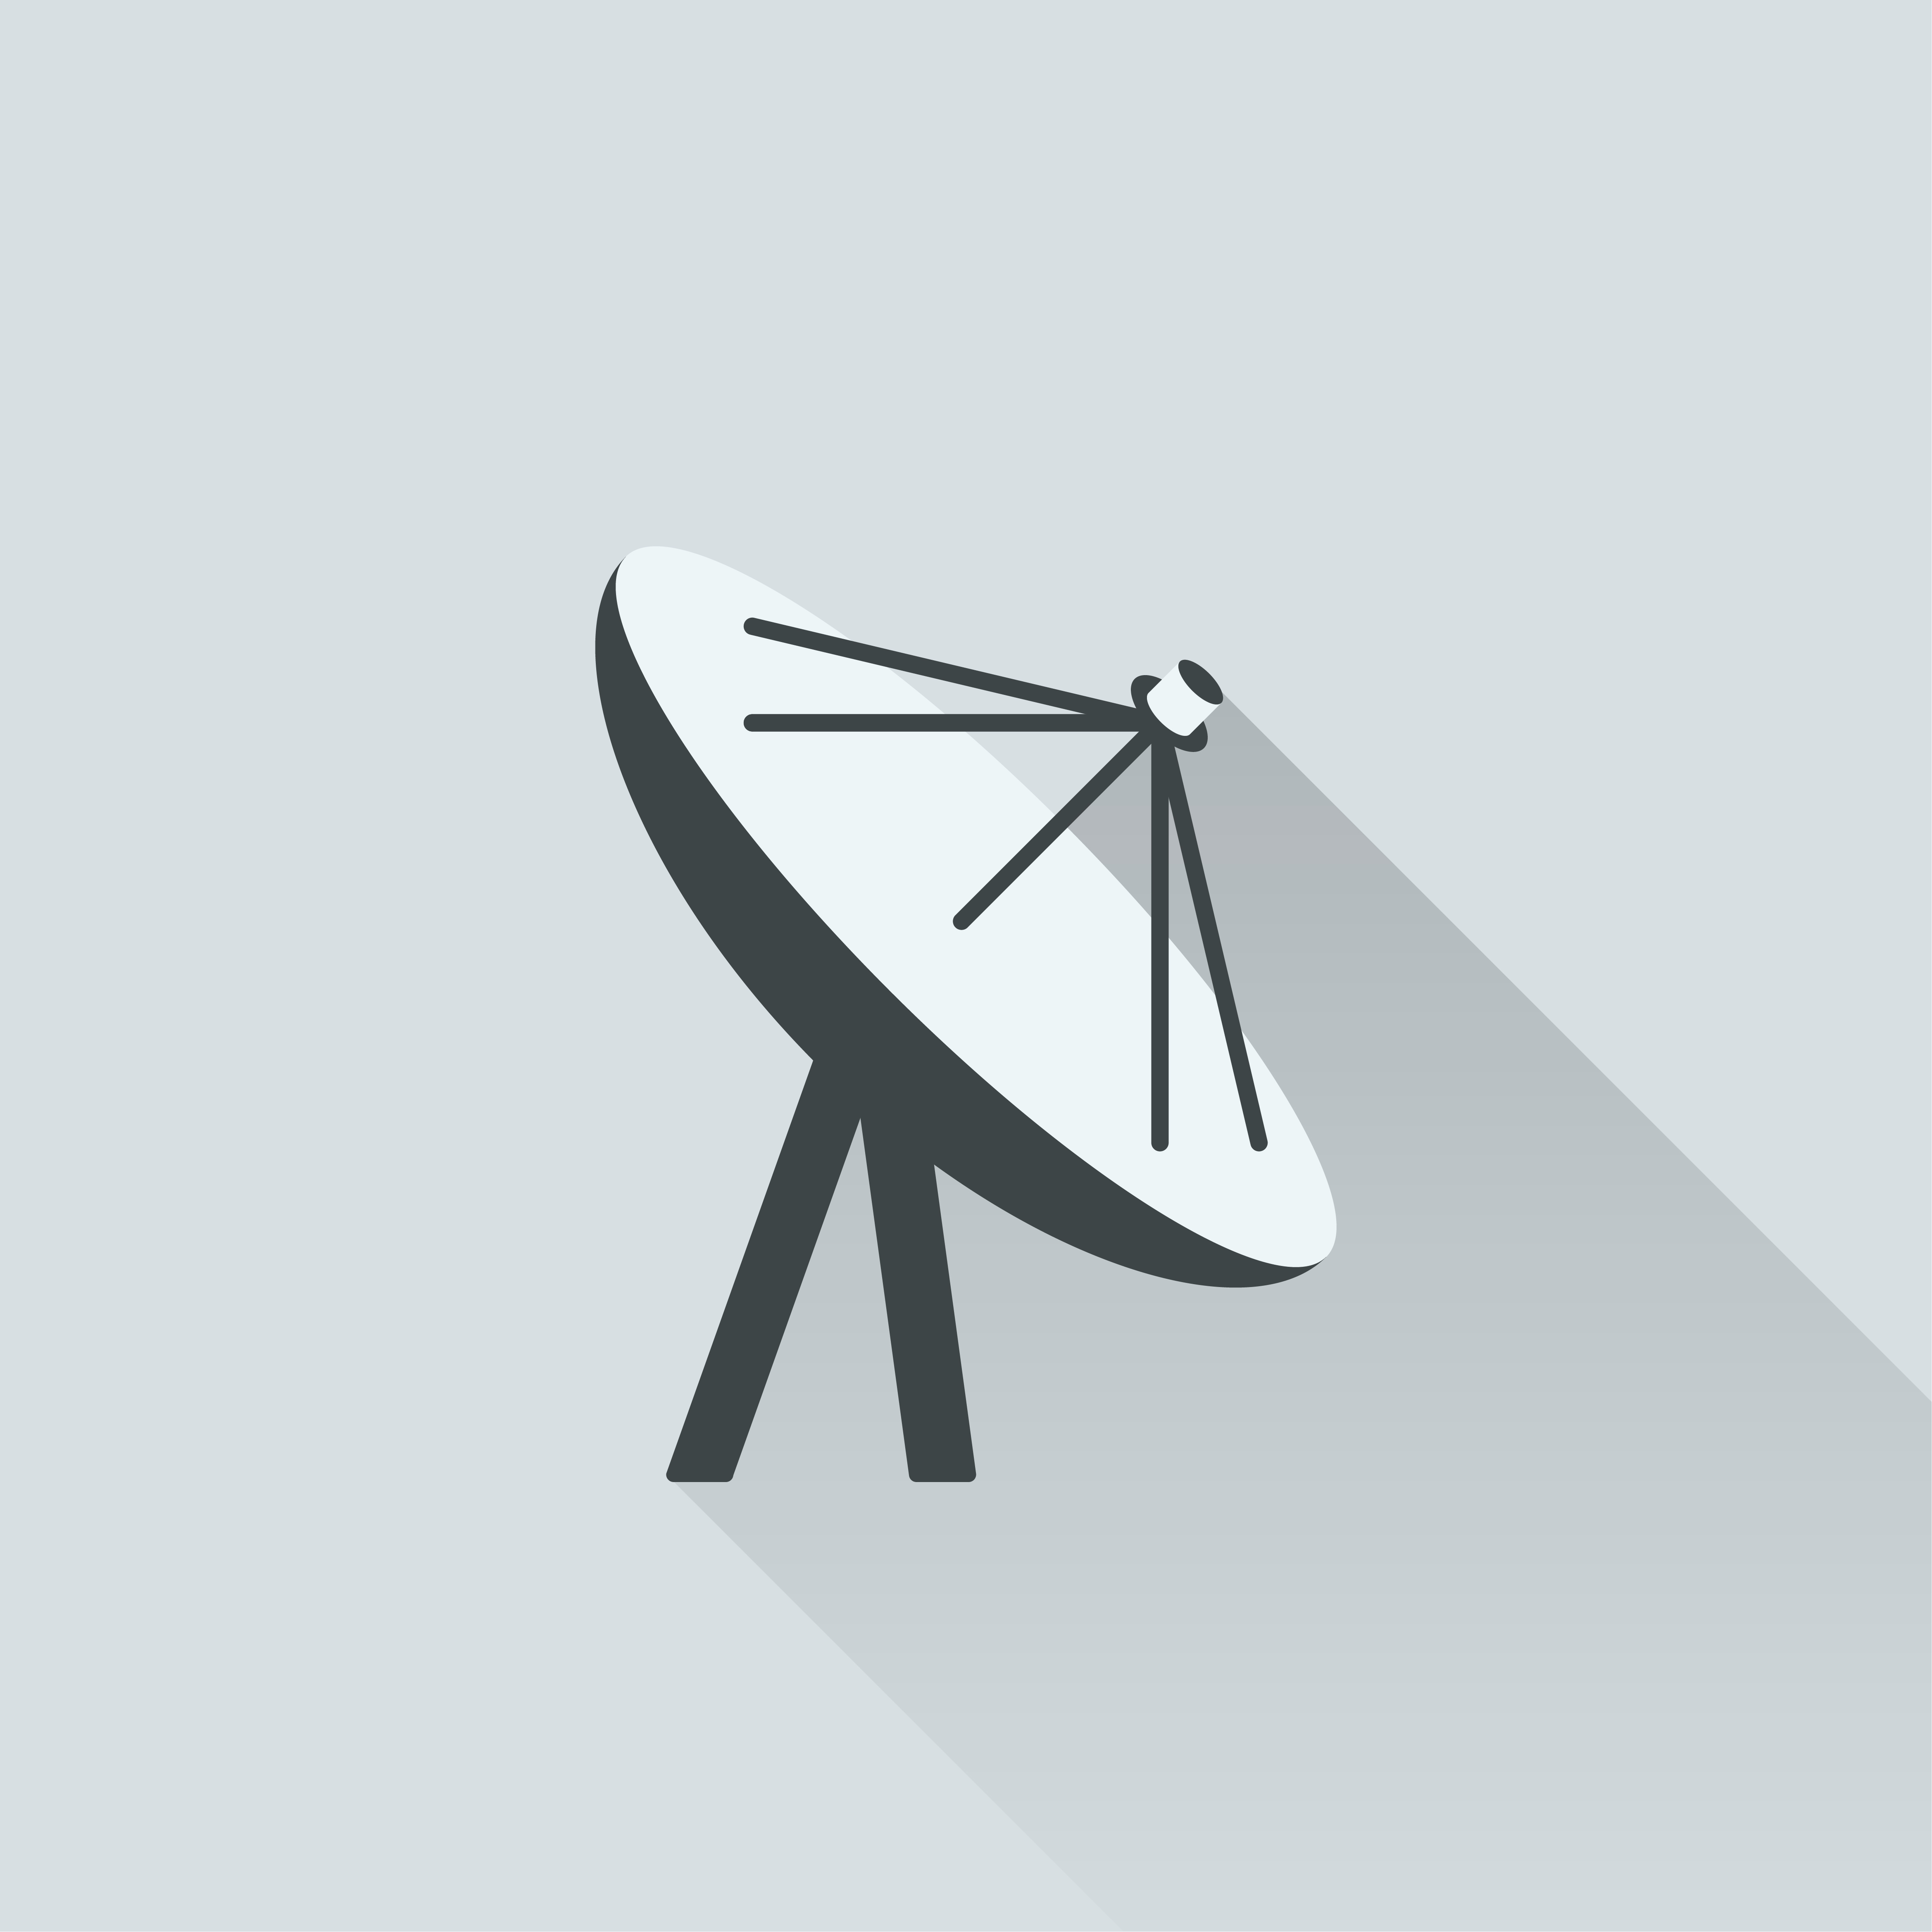 Illustration of satellite antenna